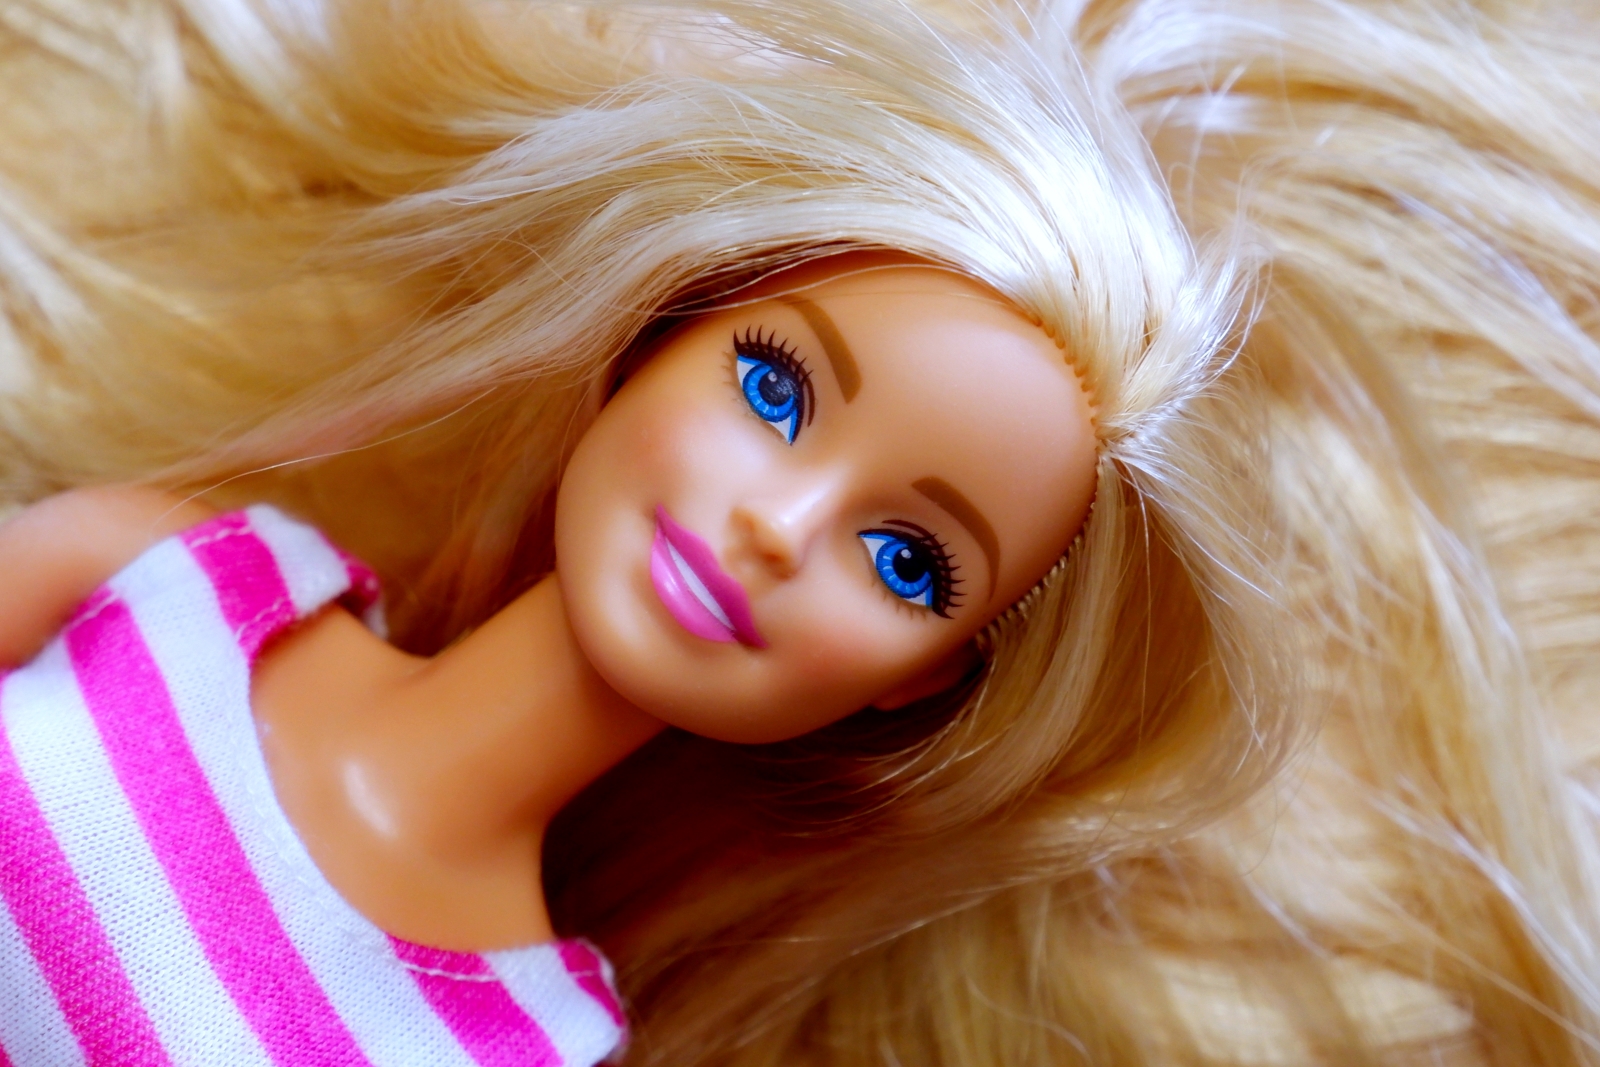 Oι μεγάλες αποτυχίες της Mattel με τη Barbie: Οι κούκλες του Barbieverse που αποσύρθηκαν μετά από αντιδράσεις